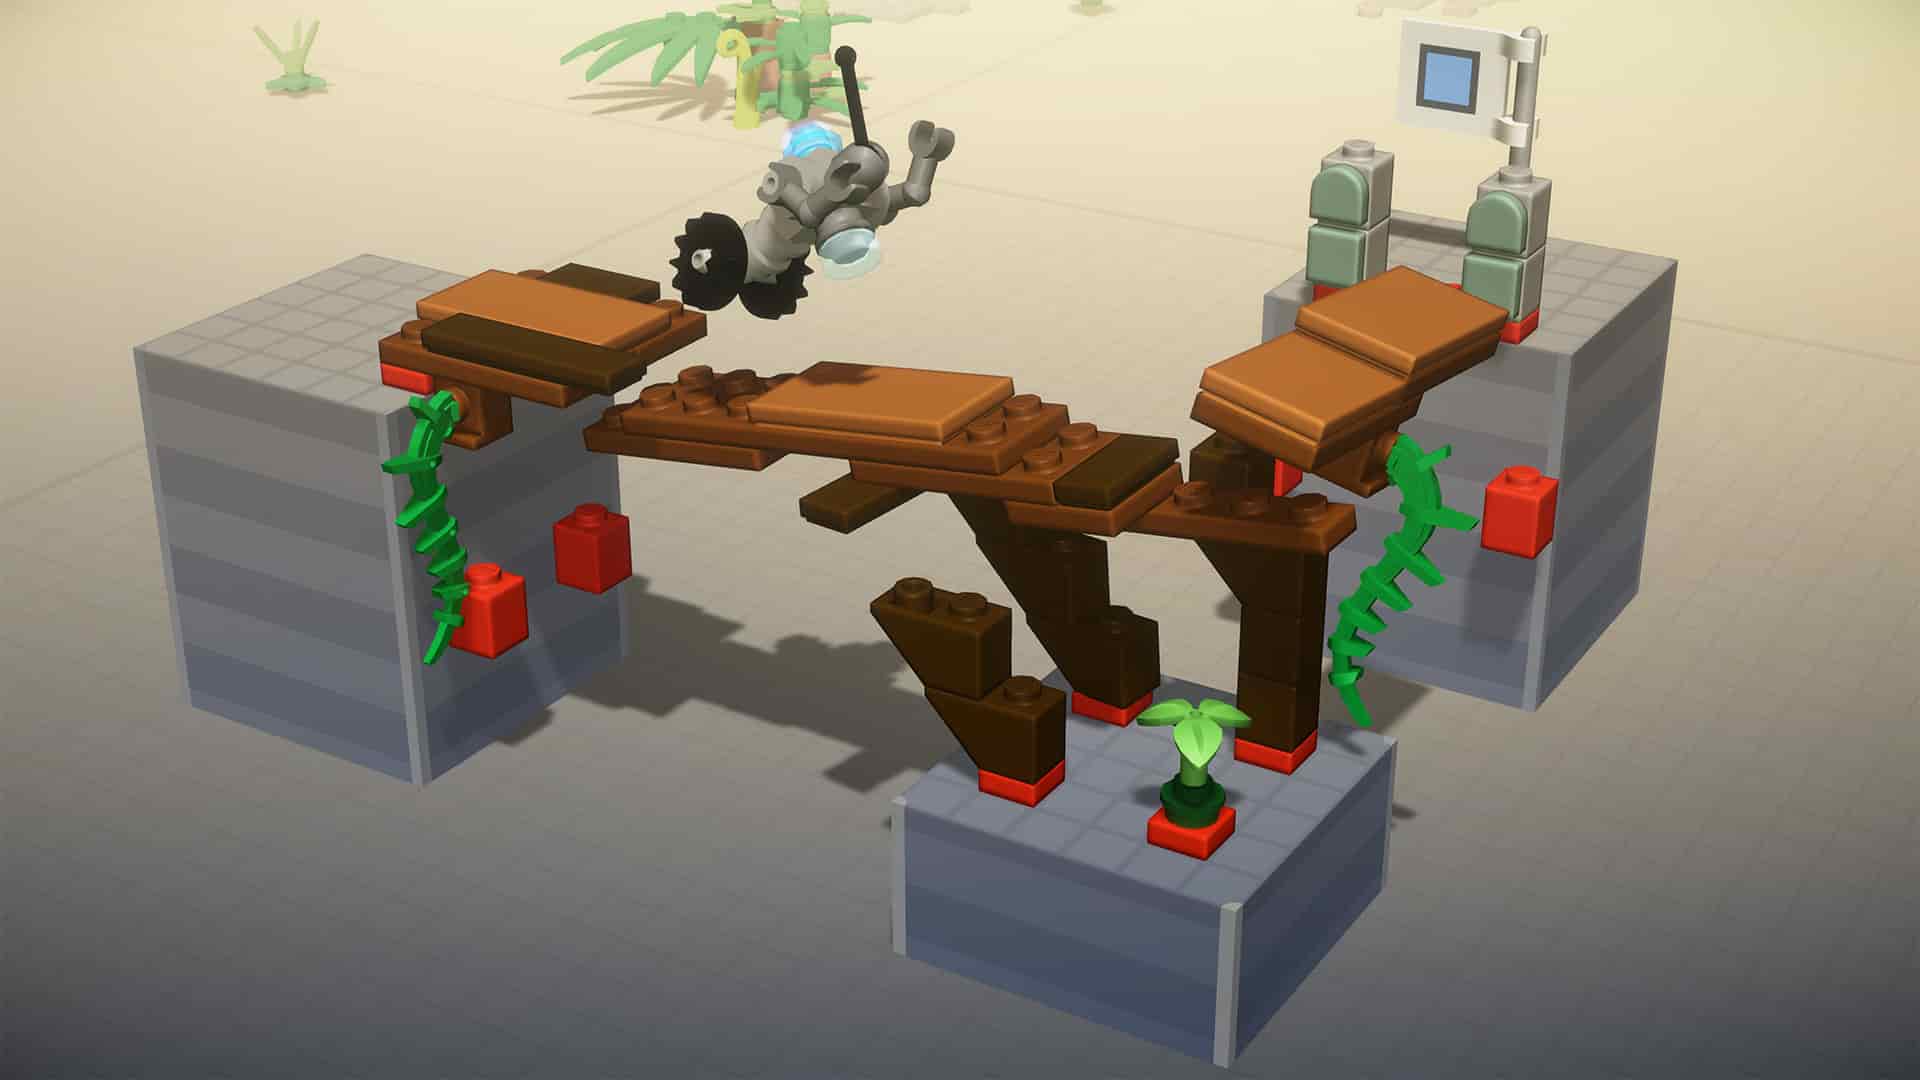 lego-bricktales-microsoft-visual-c-runtime-error-how-to-fix-it-min